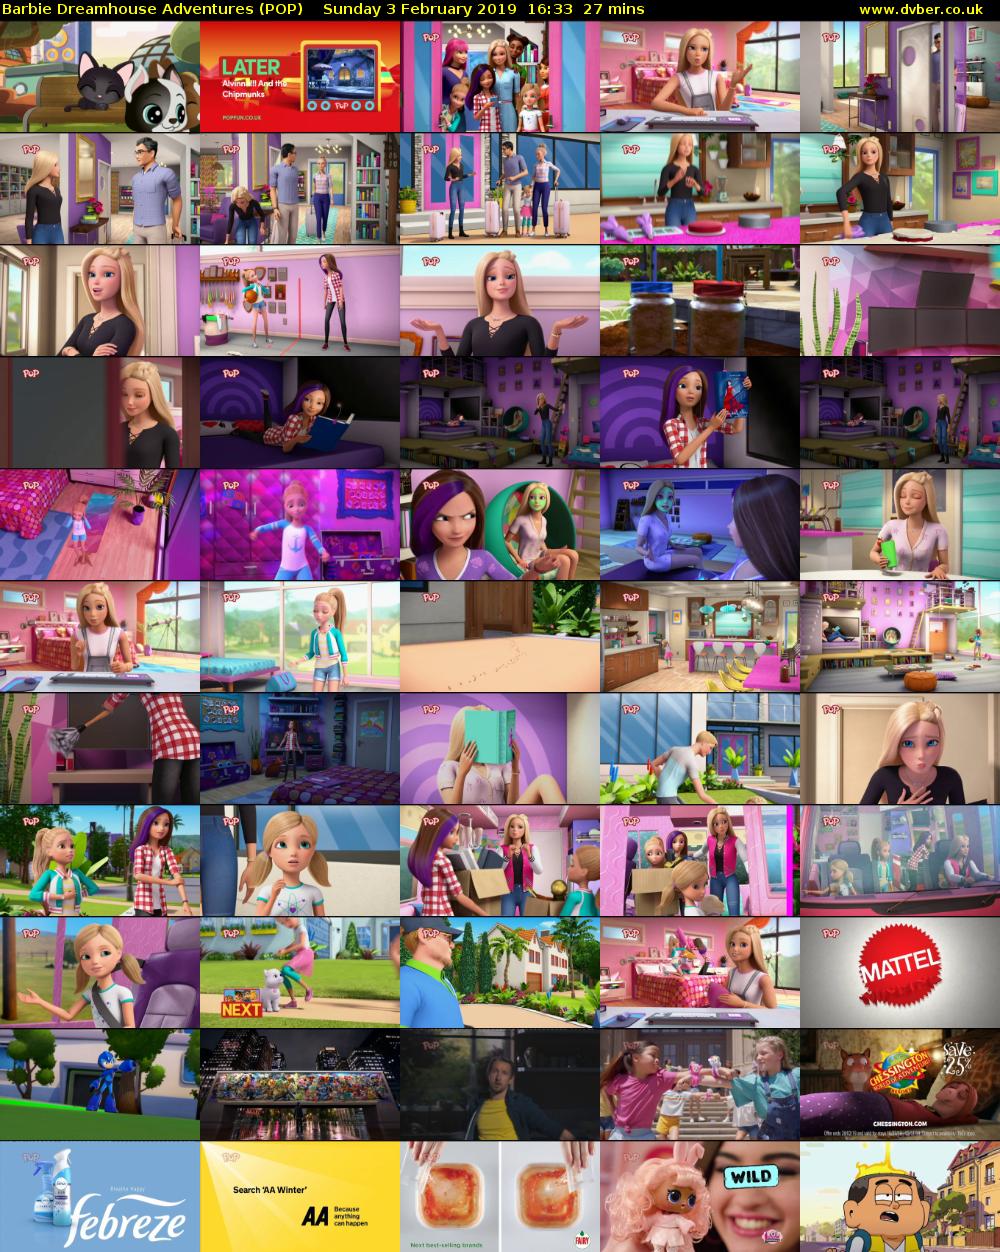 Barbie Dreamhouse Adventures (POP) Sunday 3 February 2019 16:33 - 17:00